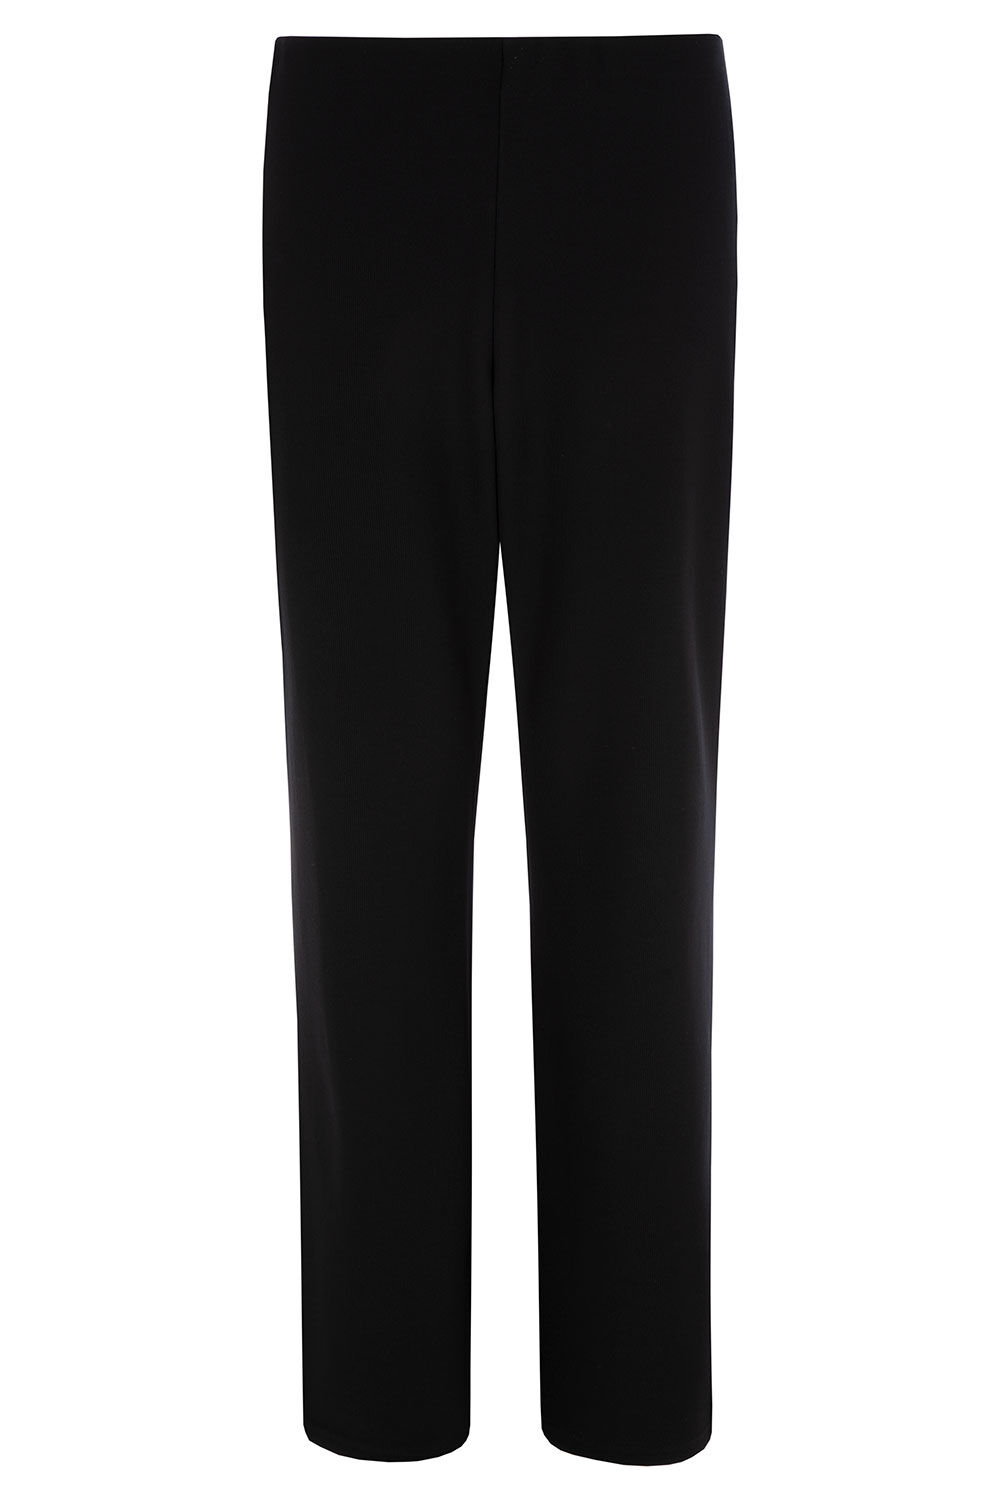 LADIES SIZE 20 Wide Leg Polyester Black Trousers George Asda Elasticated  Waist £1.99 - PicClick UK